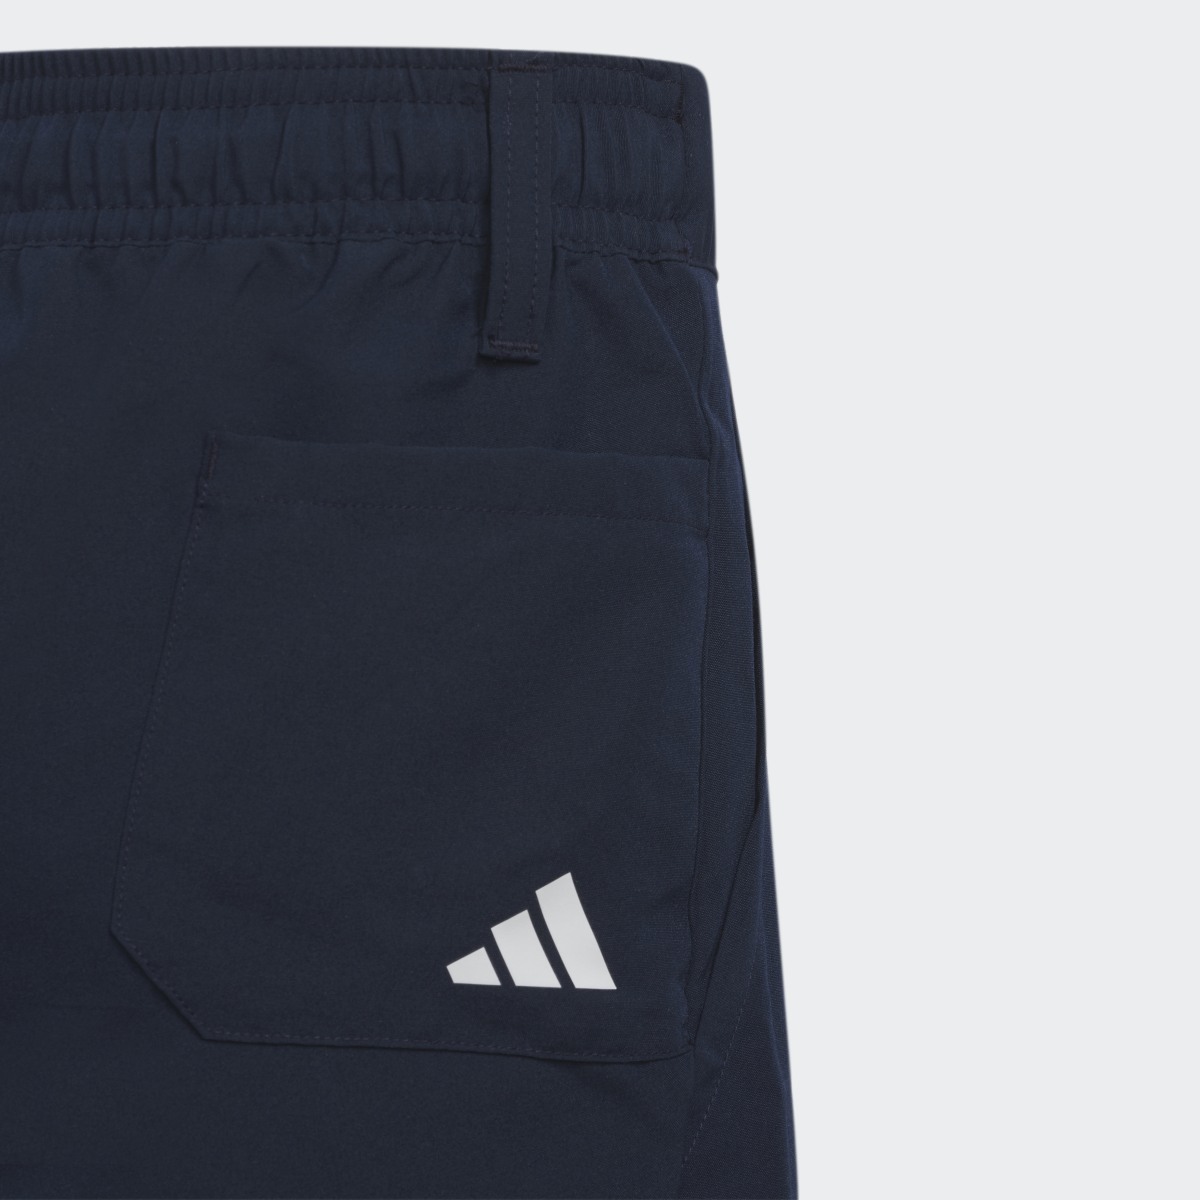 Adidas Pull-on Shorts. 5